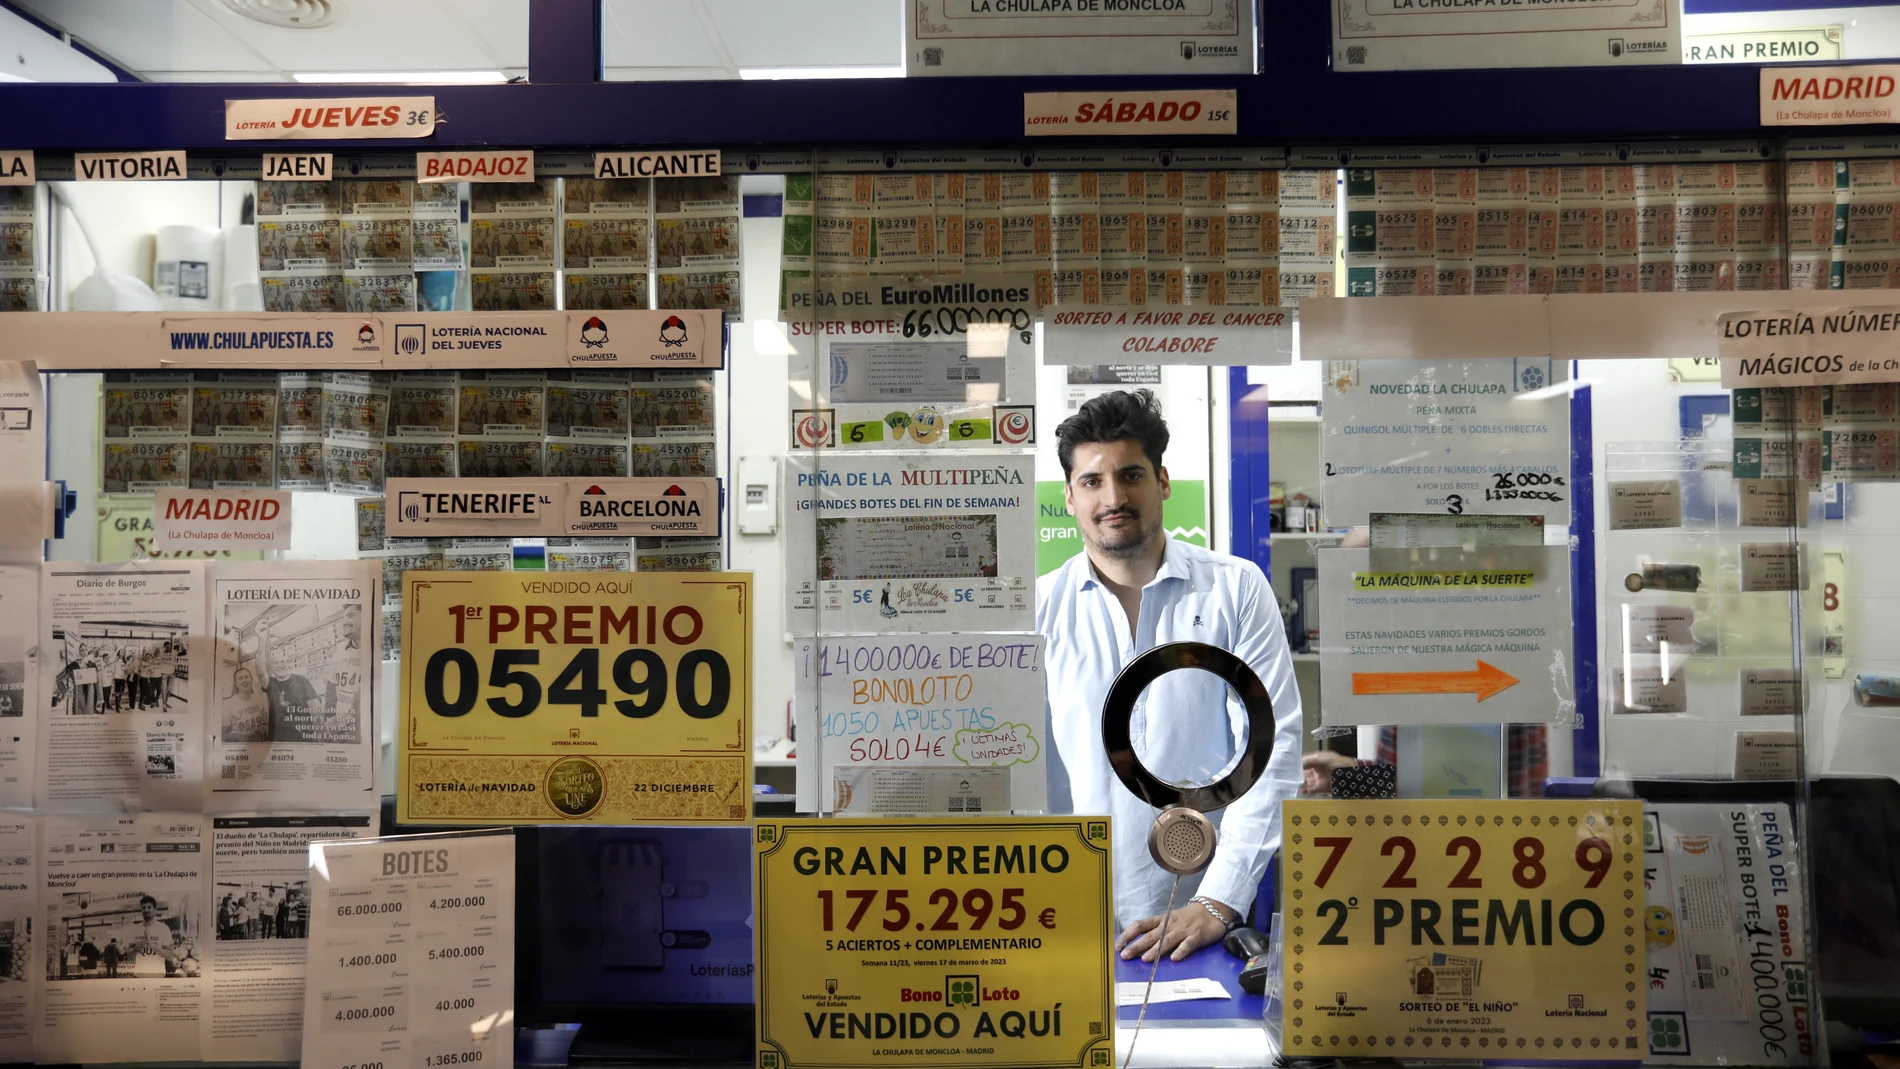 Administracion de loterias La Chulapa de Moncloa.
© Jesús G. Feria